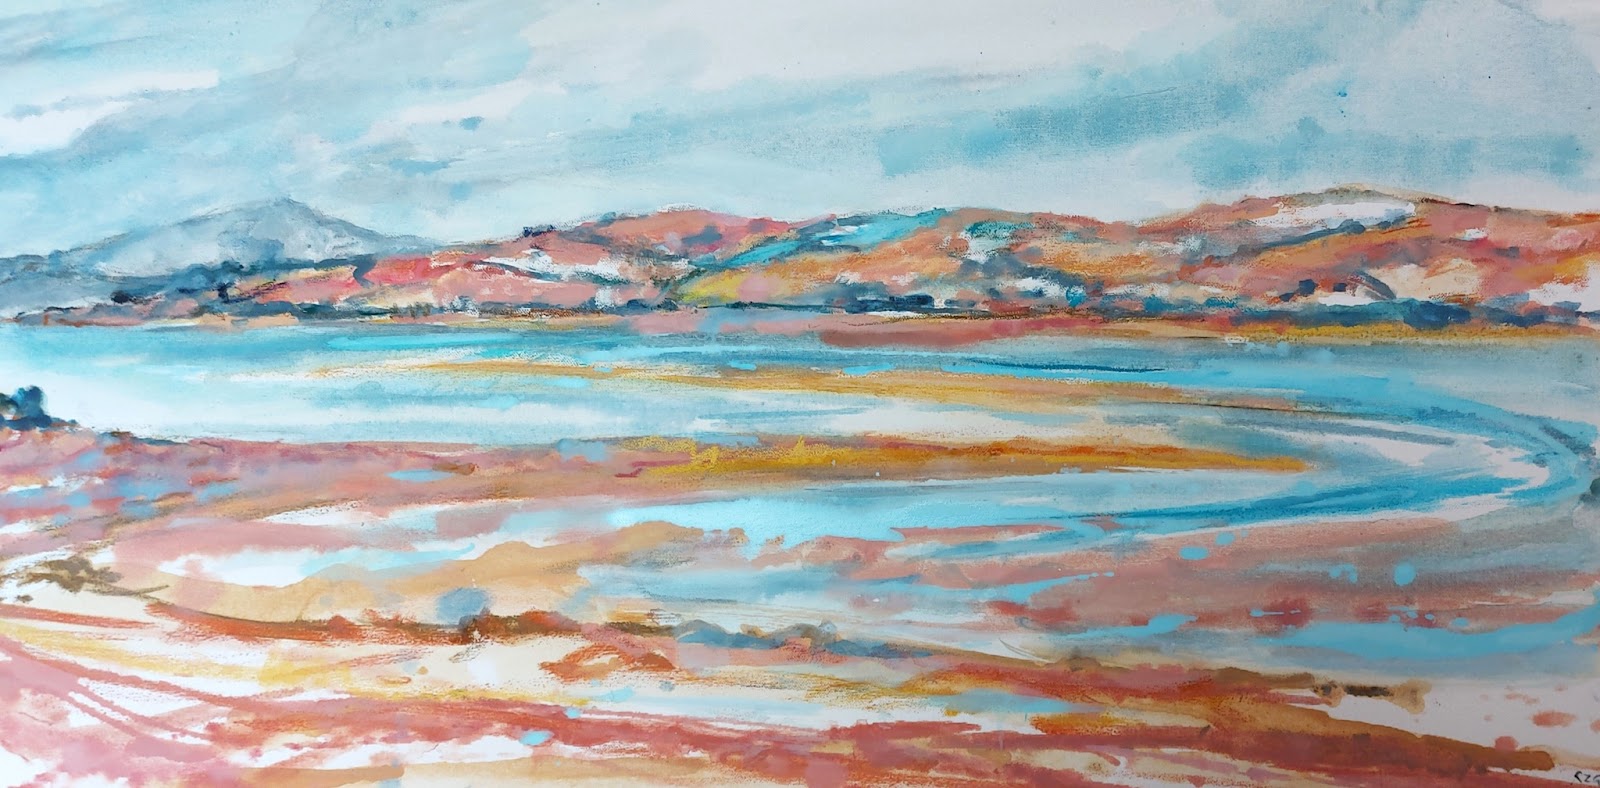 Teignmouth and Shaldon Estuary by Rachel Garner